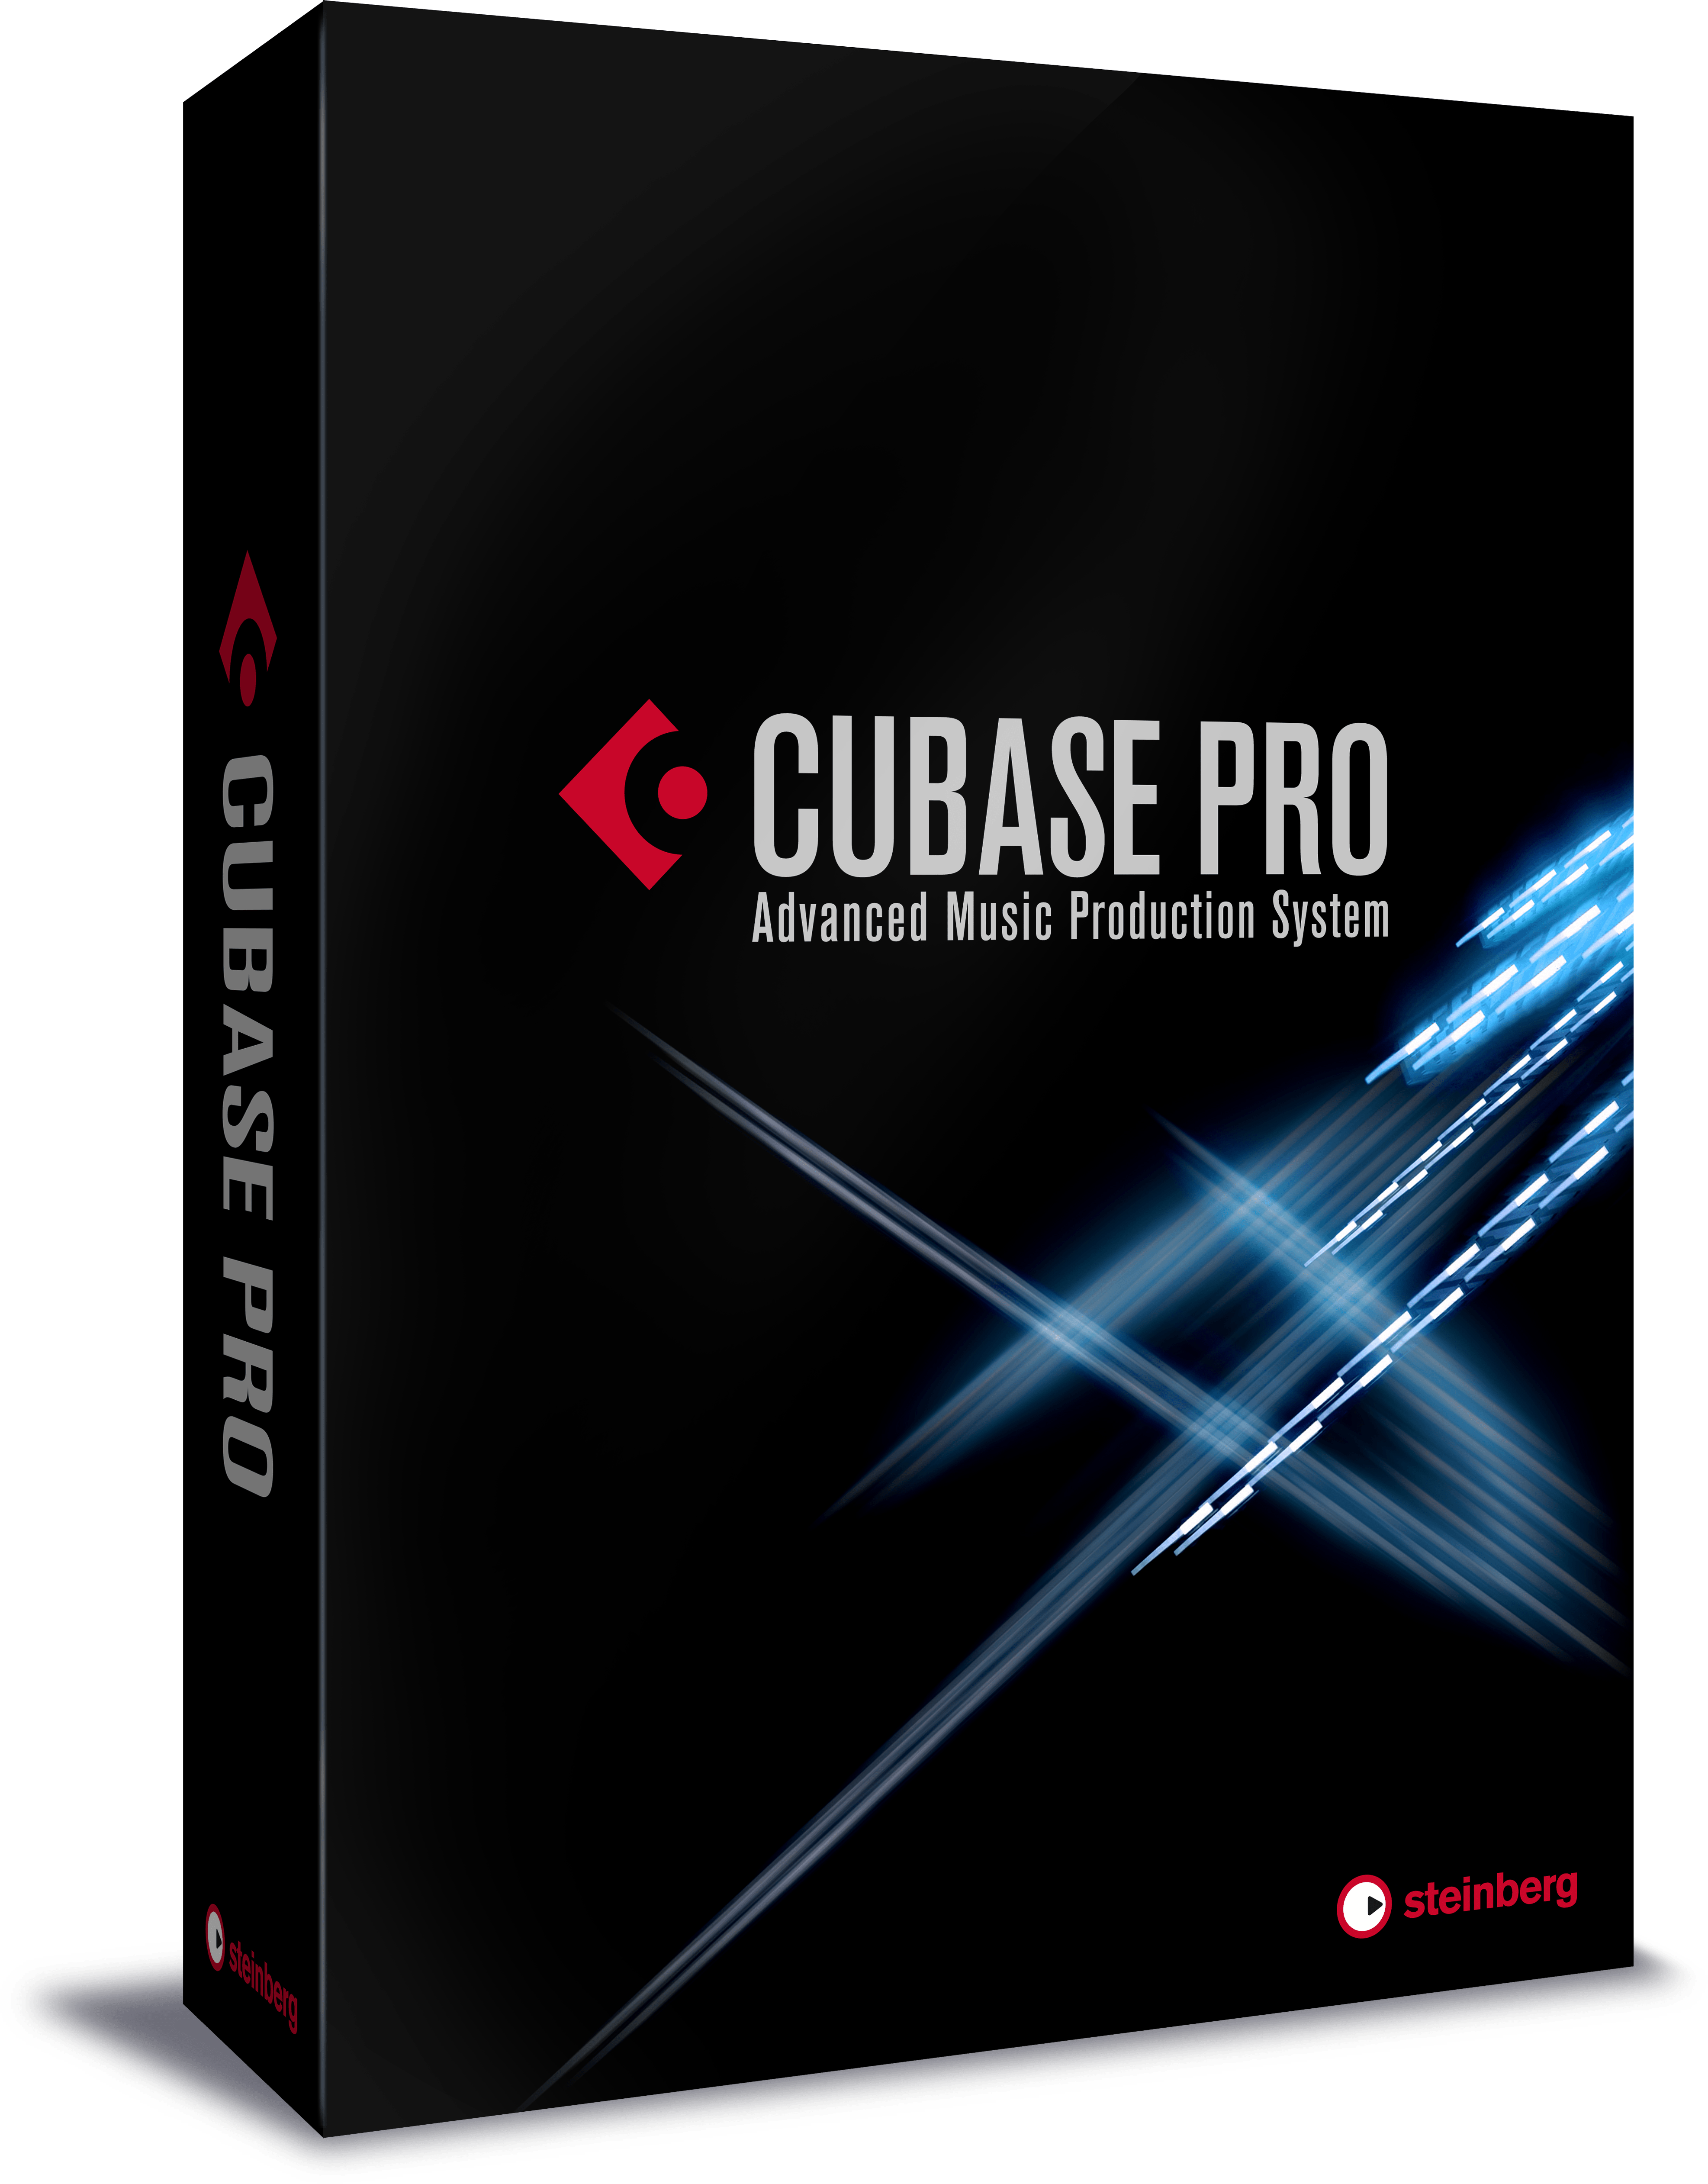 Cubase 10 crack full version free download 12